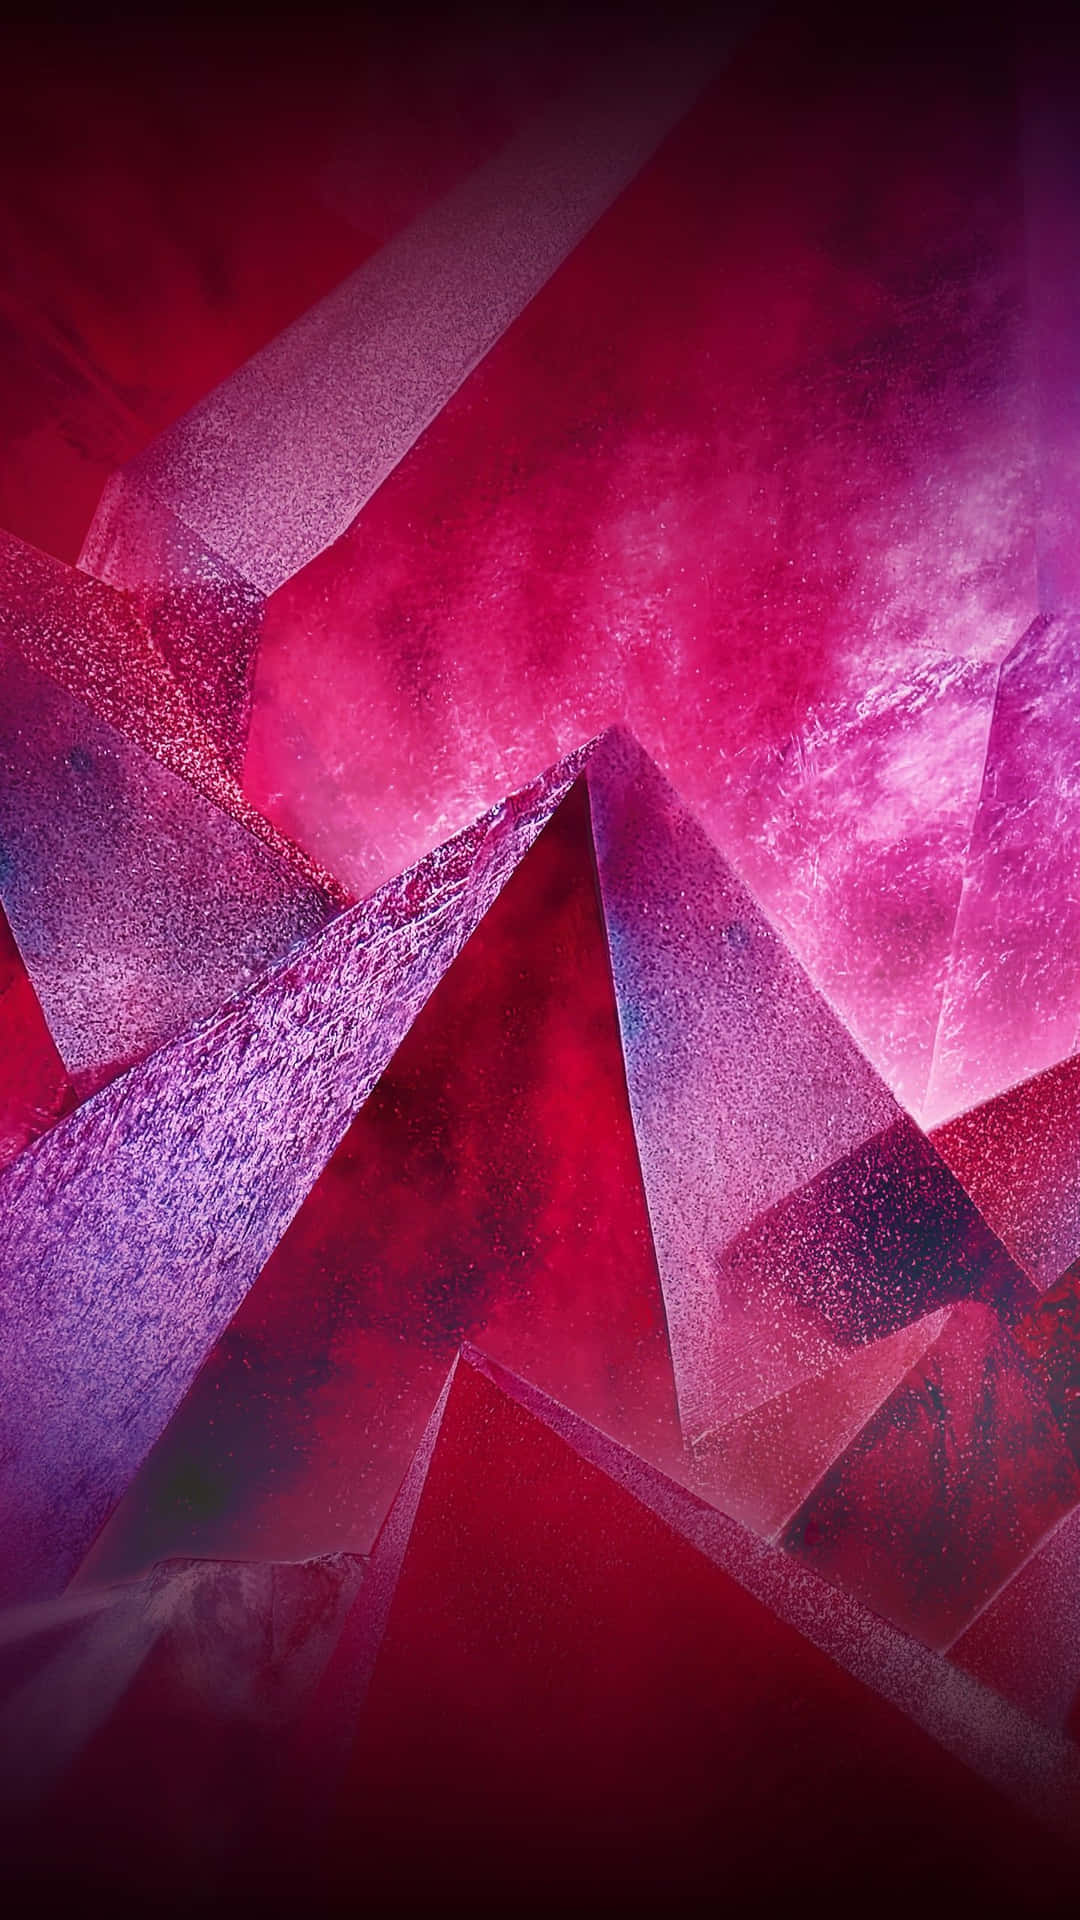 Aesthetic Pink Crystal Quartz Cluster Wallpaper